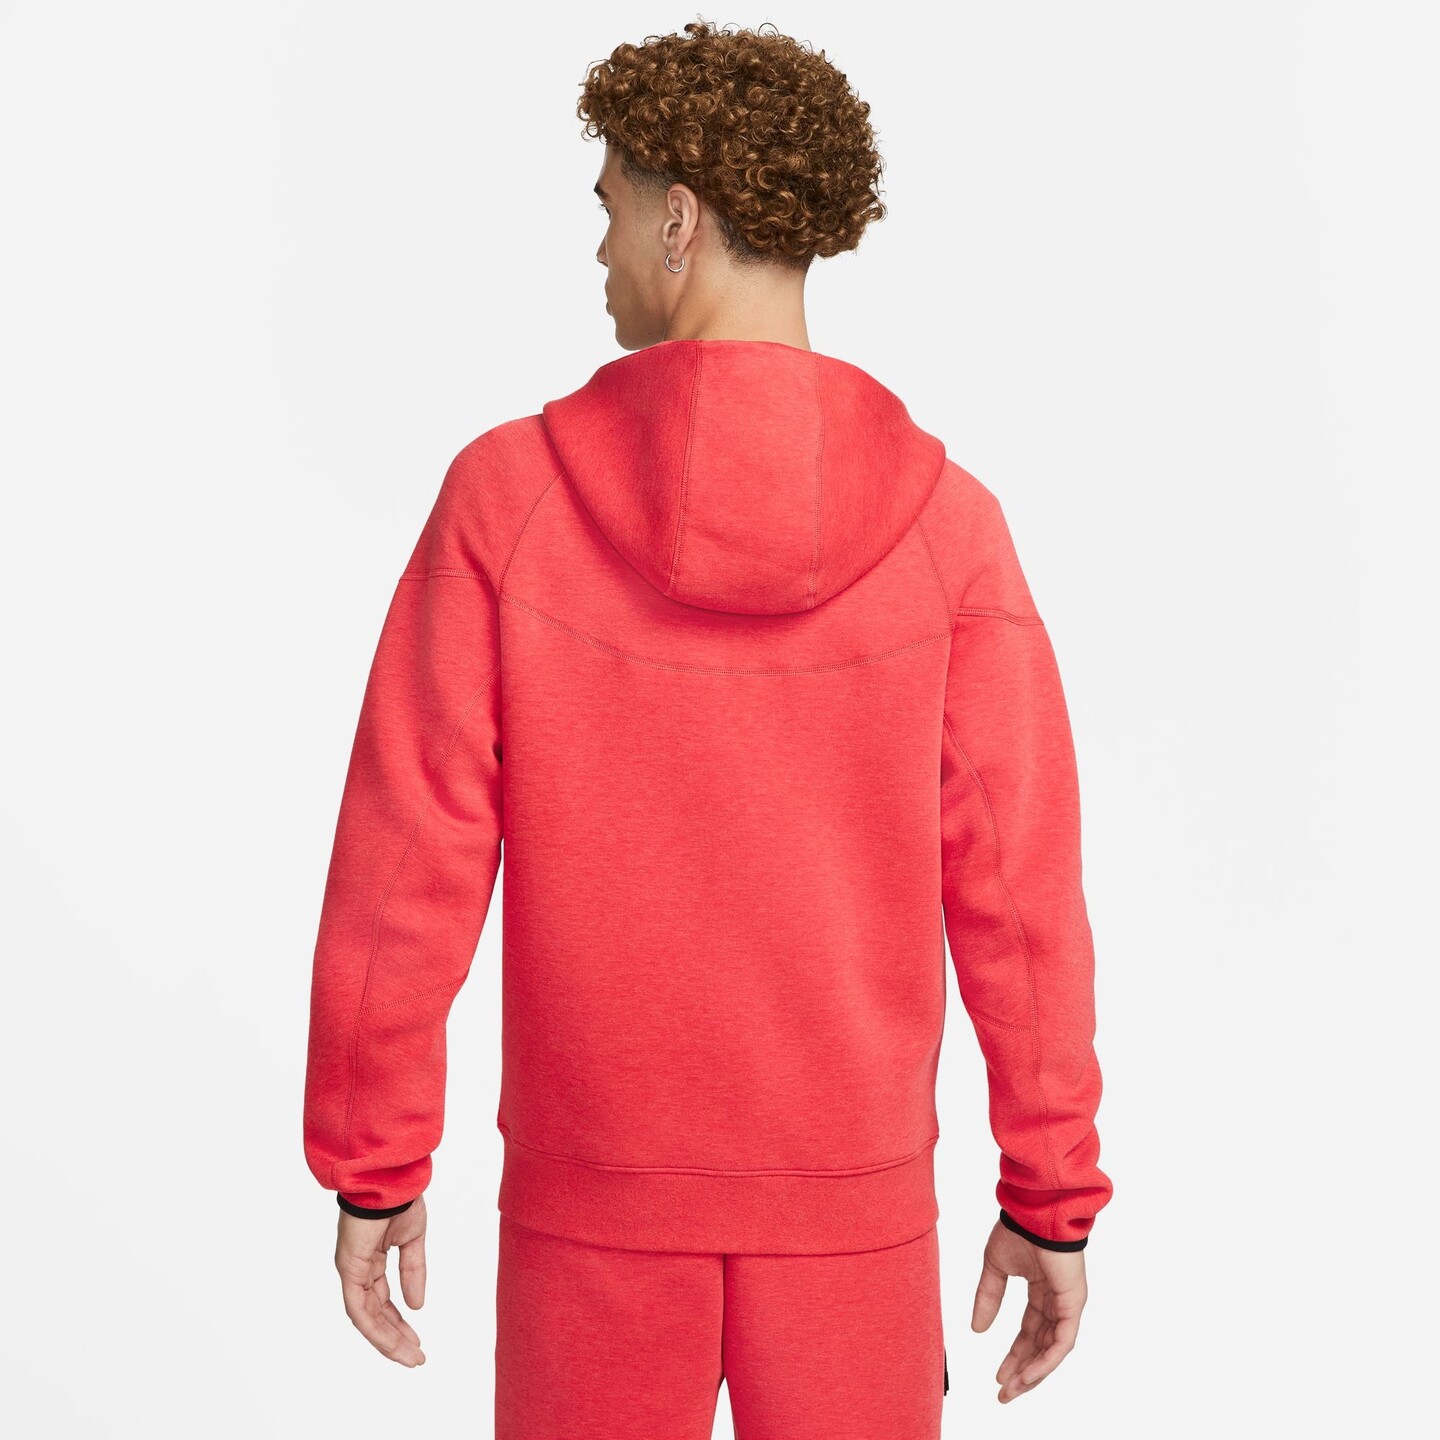 Men's Nike Tech Flece Jacket 'Light University Red' FB7921-672 - Sam Tabak